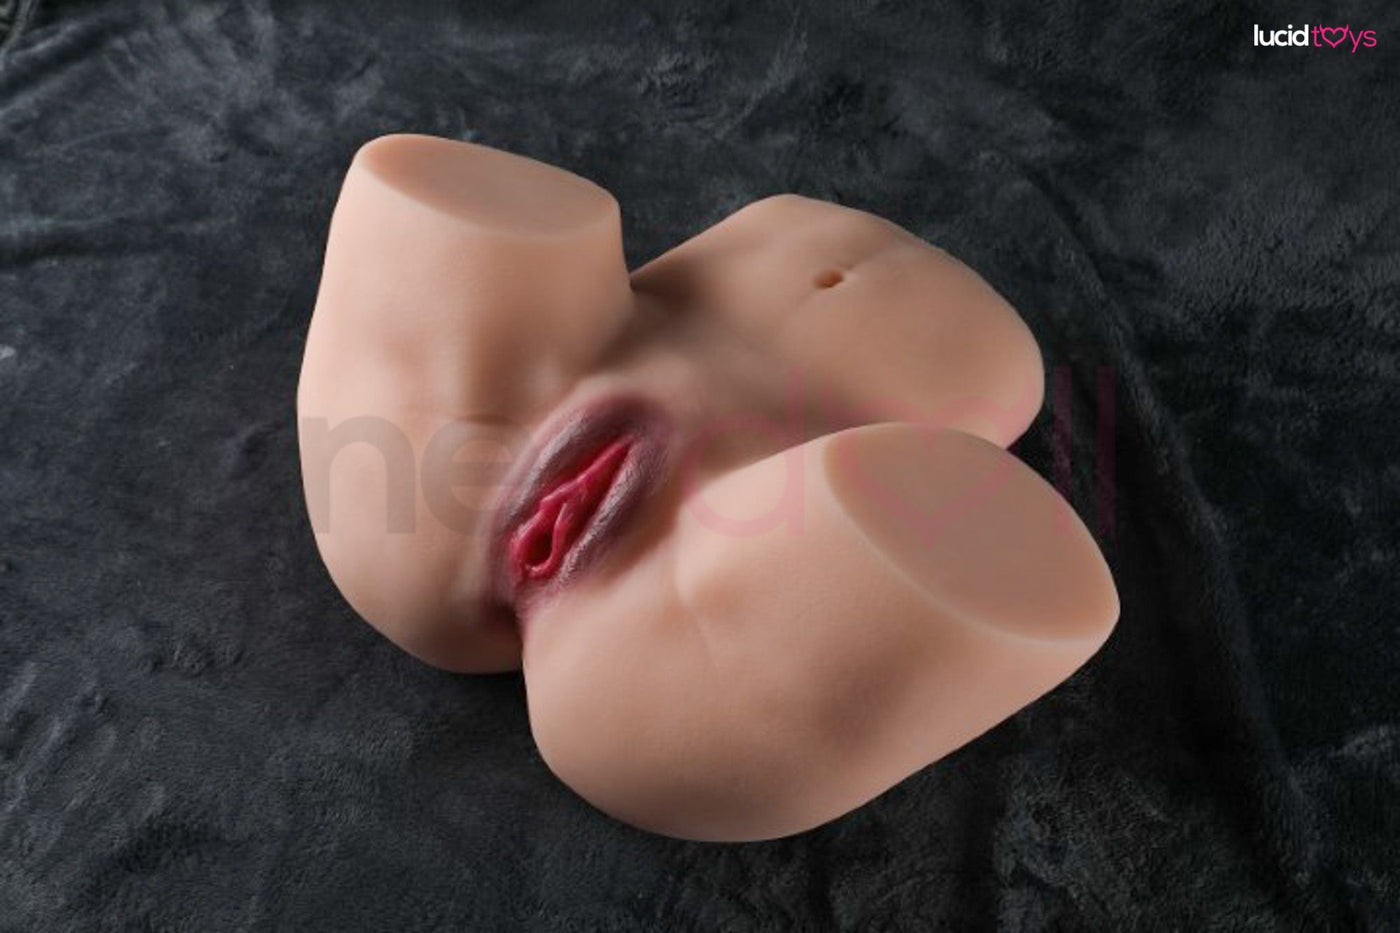 YQ Doll - Sex Butt - 9.3kg - Natural